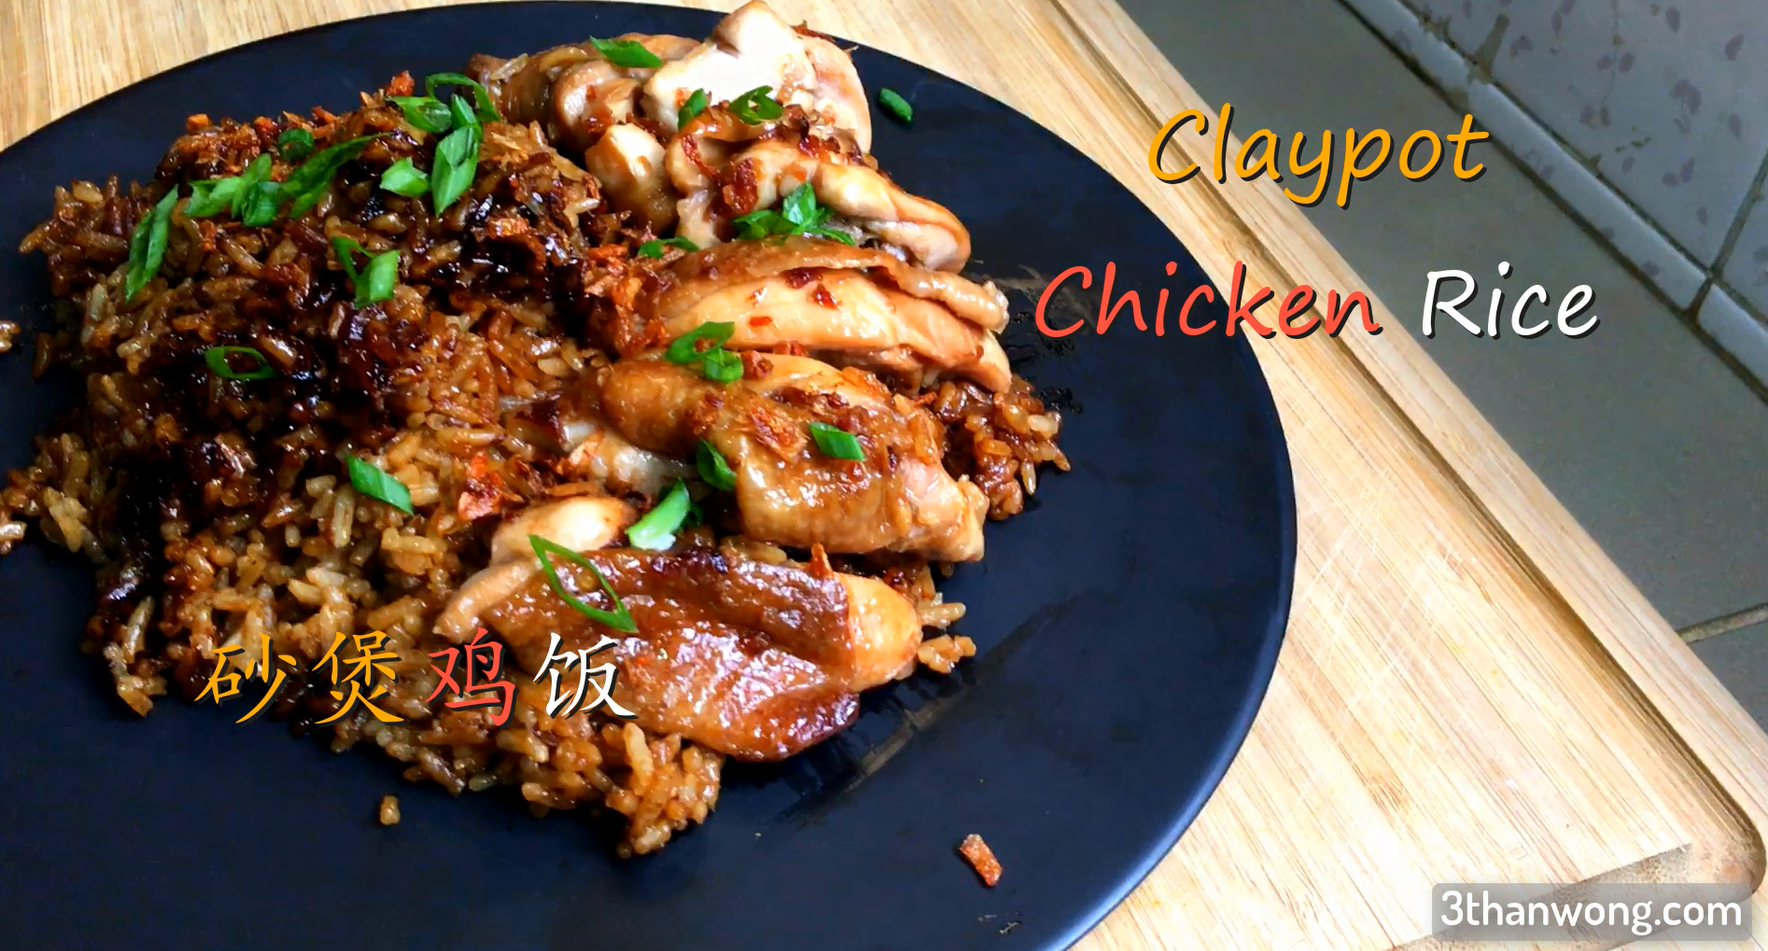 Claypot Chicken Rice – A Rice Cooker Recipe